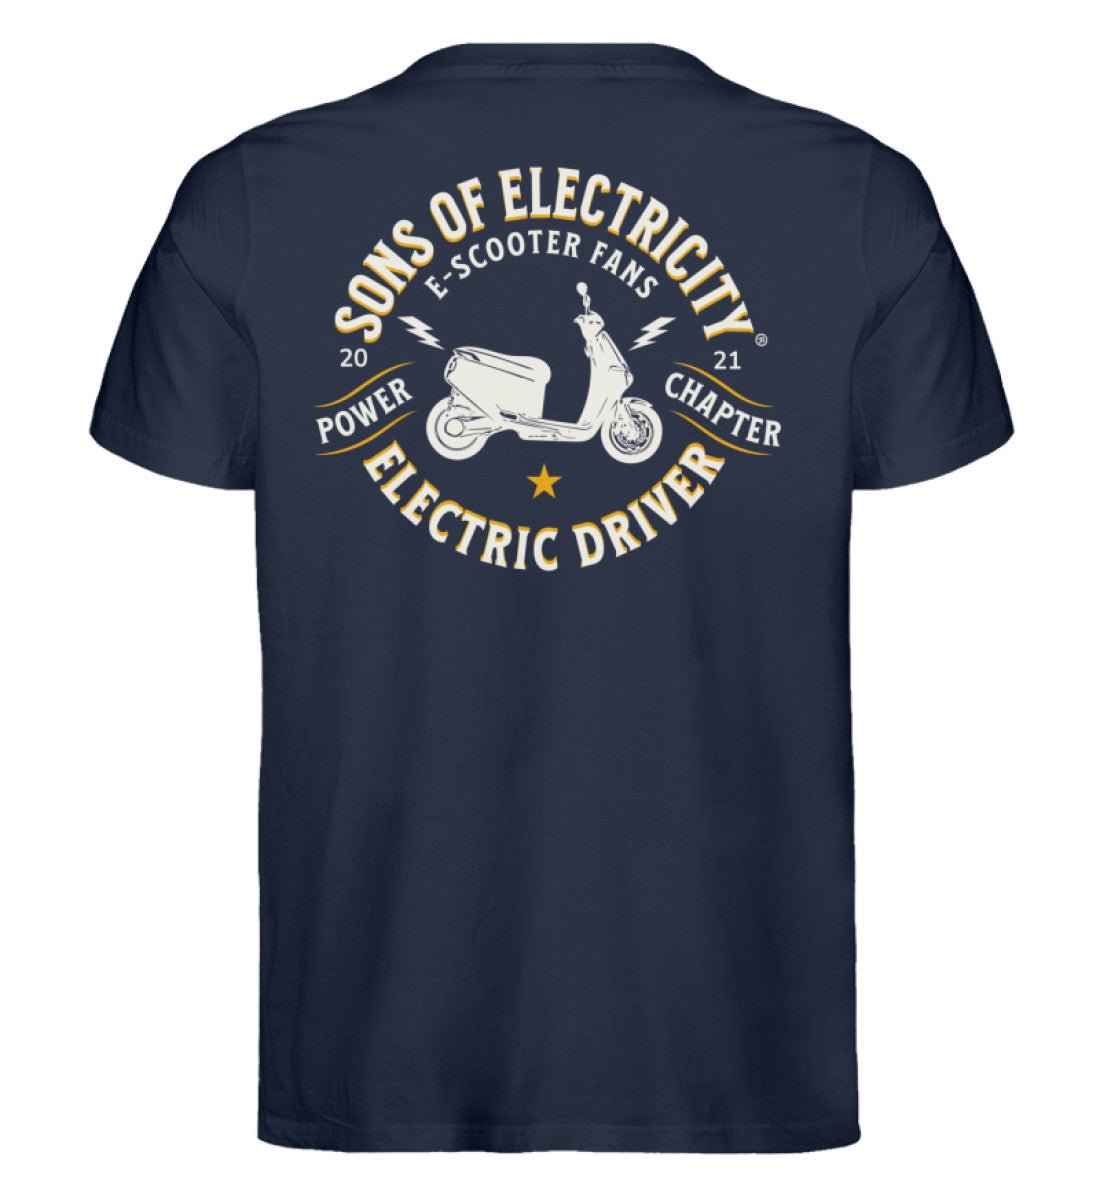 Bio Premium E-Motorroller T-Shirt: SONS OF ELECTRICITY